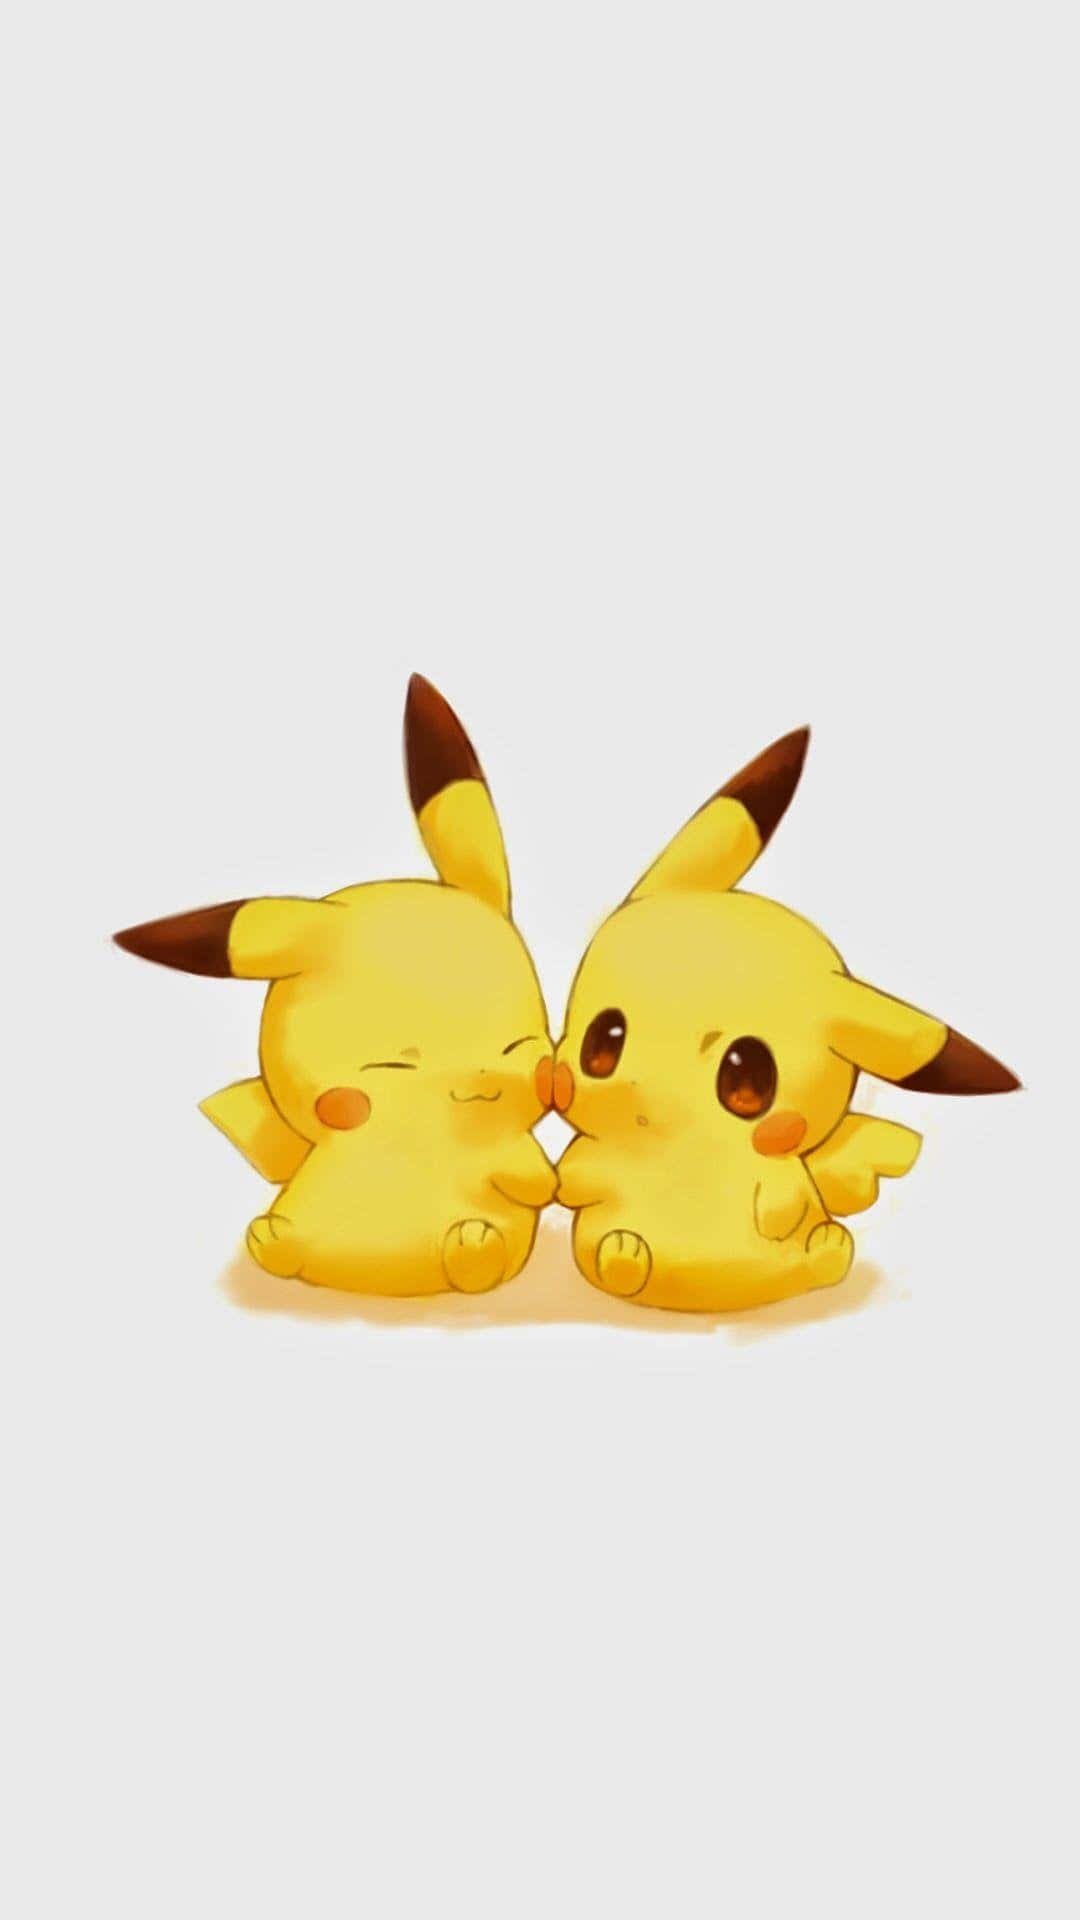 Adorable Pikachu Pair Kissing Wallpaper